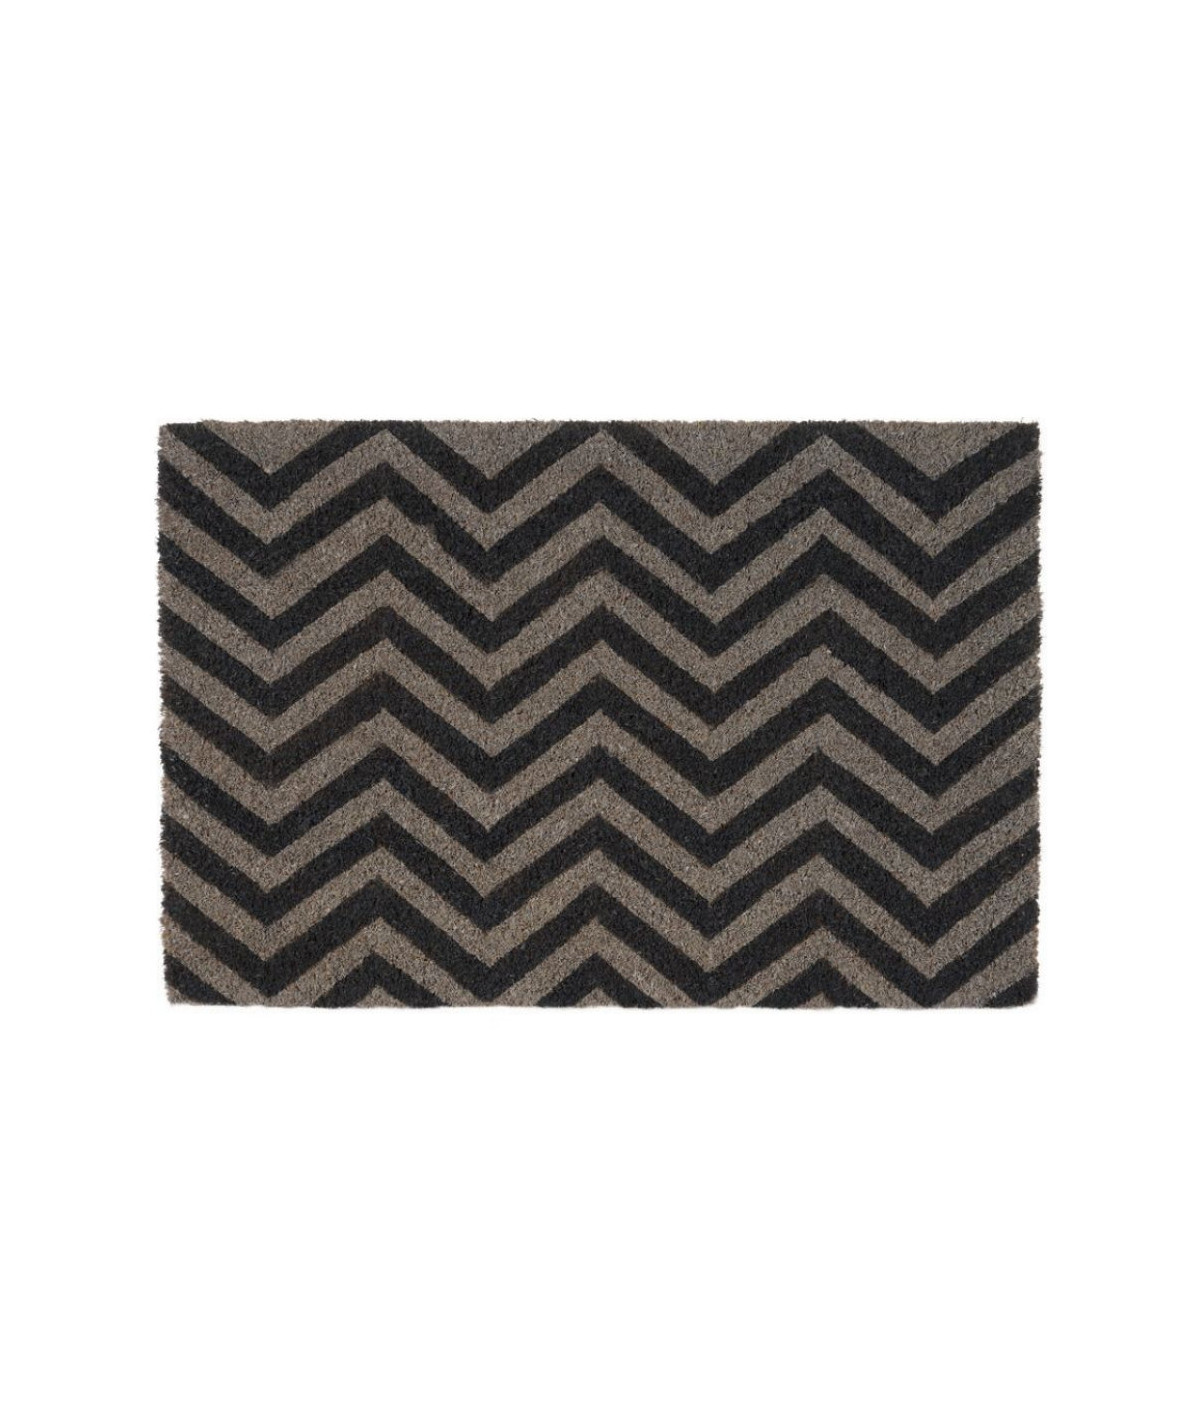 Paillasson coco gris, motif zigzag 60X40cm - Wave | Yesdeko